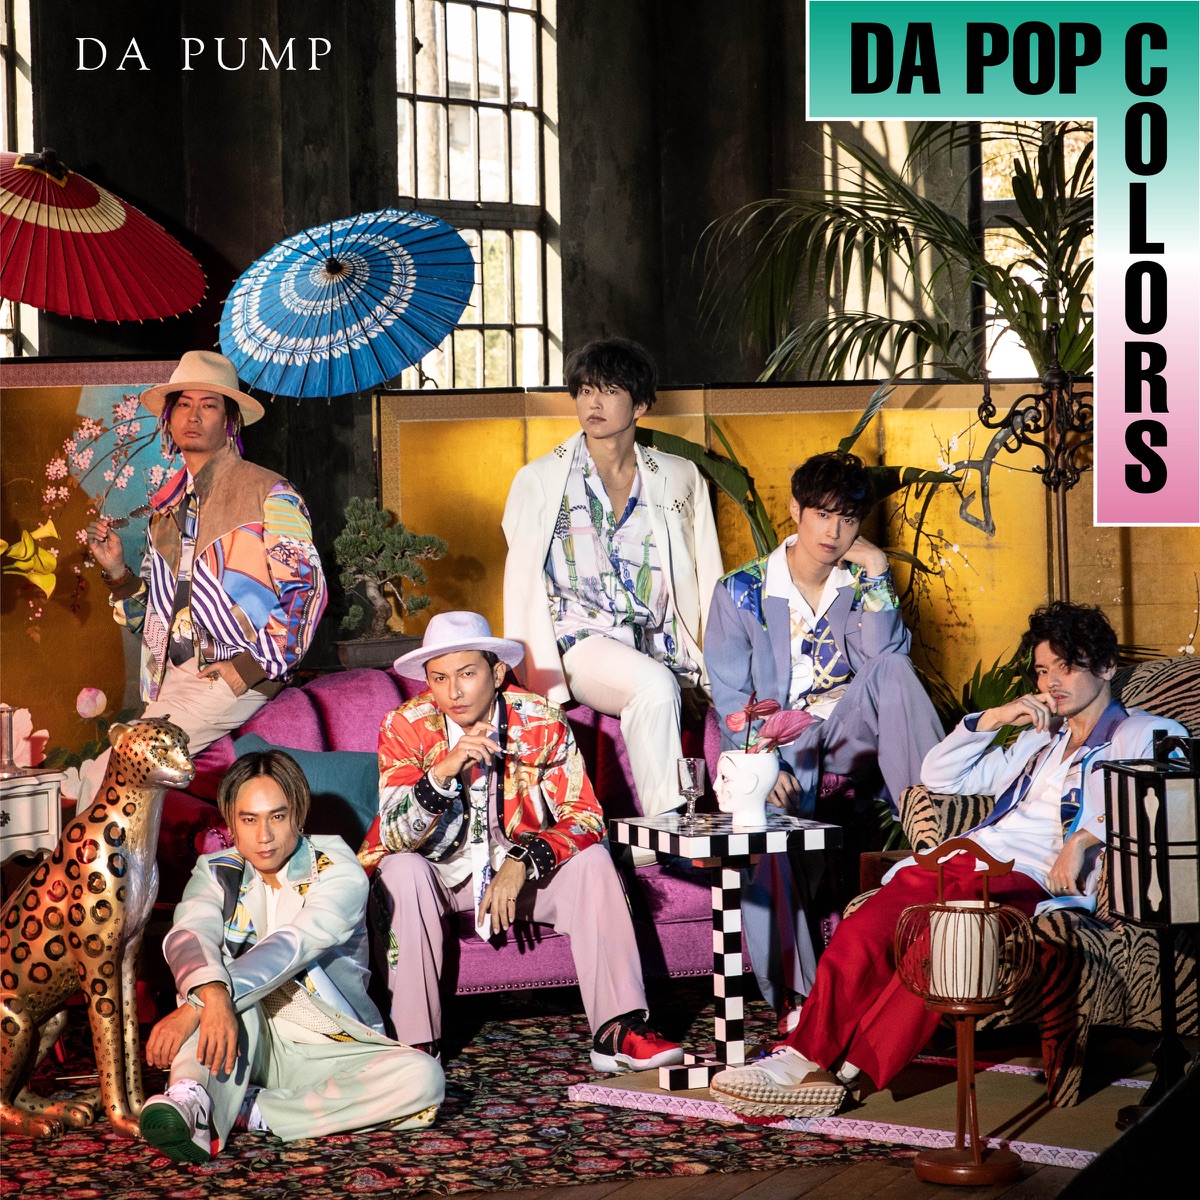 Cover art for『DA PUMP - Our Milestone』from the release『DA POP COLORS』